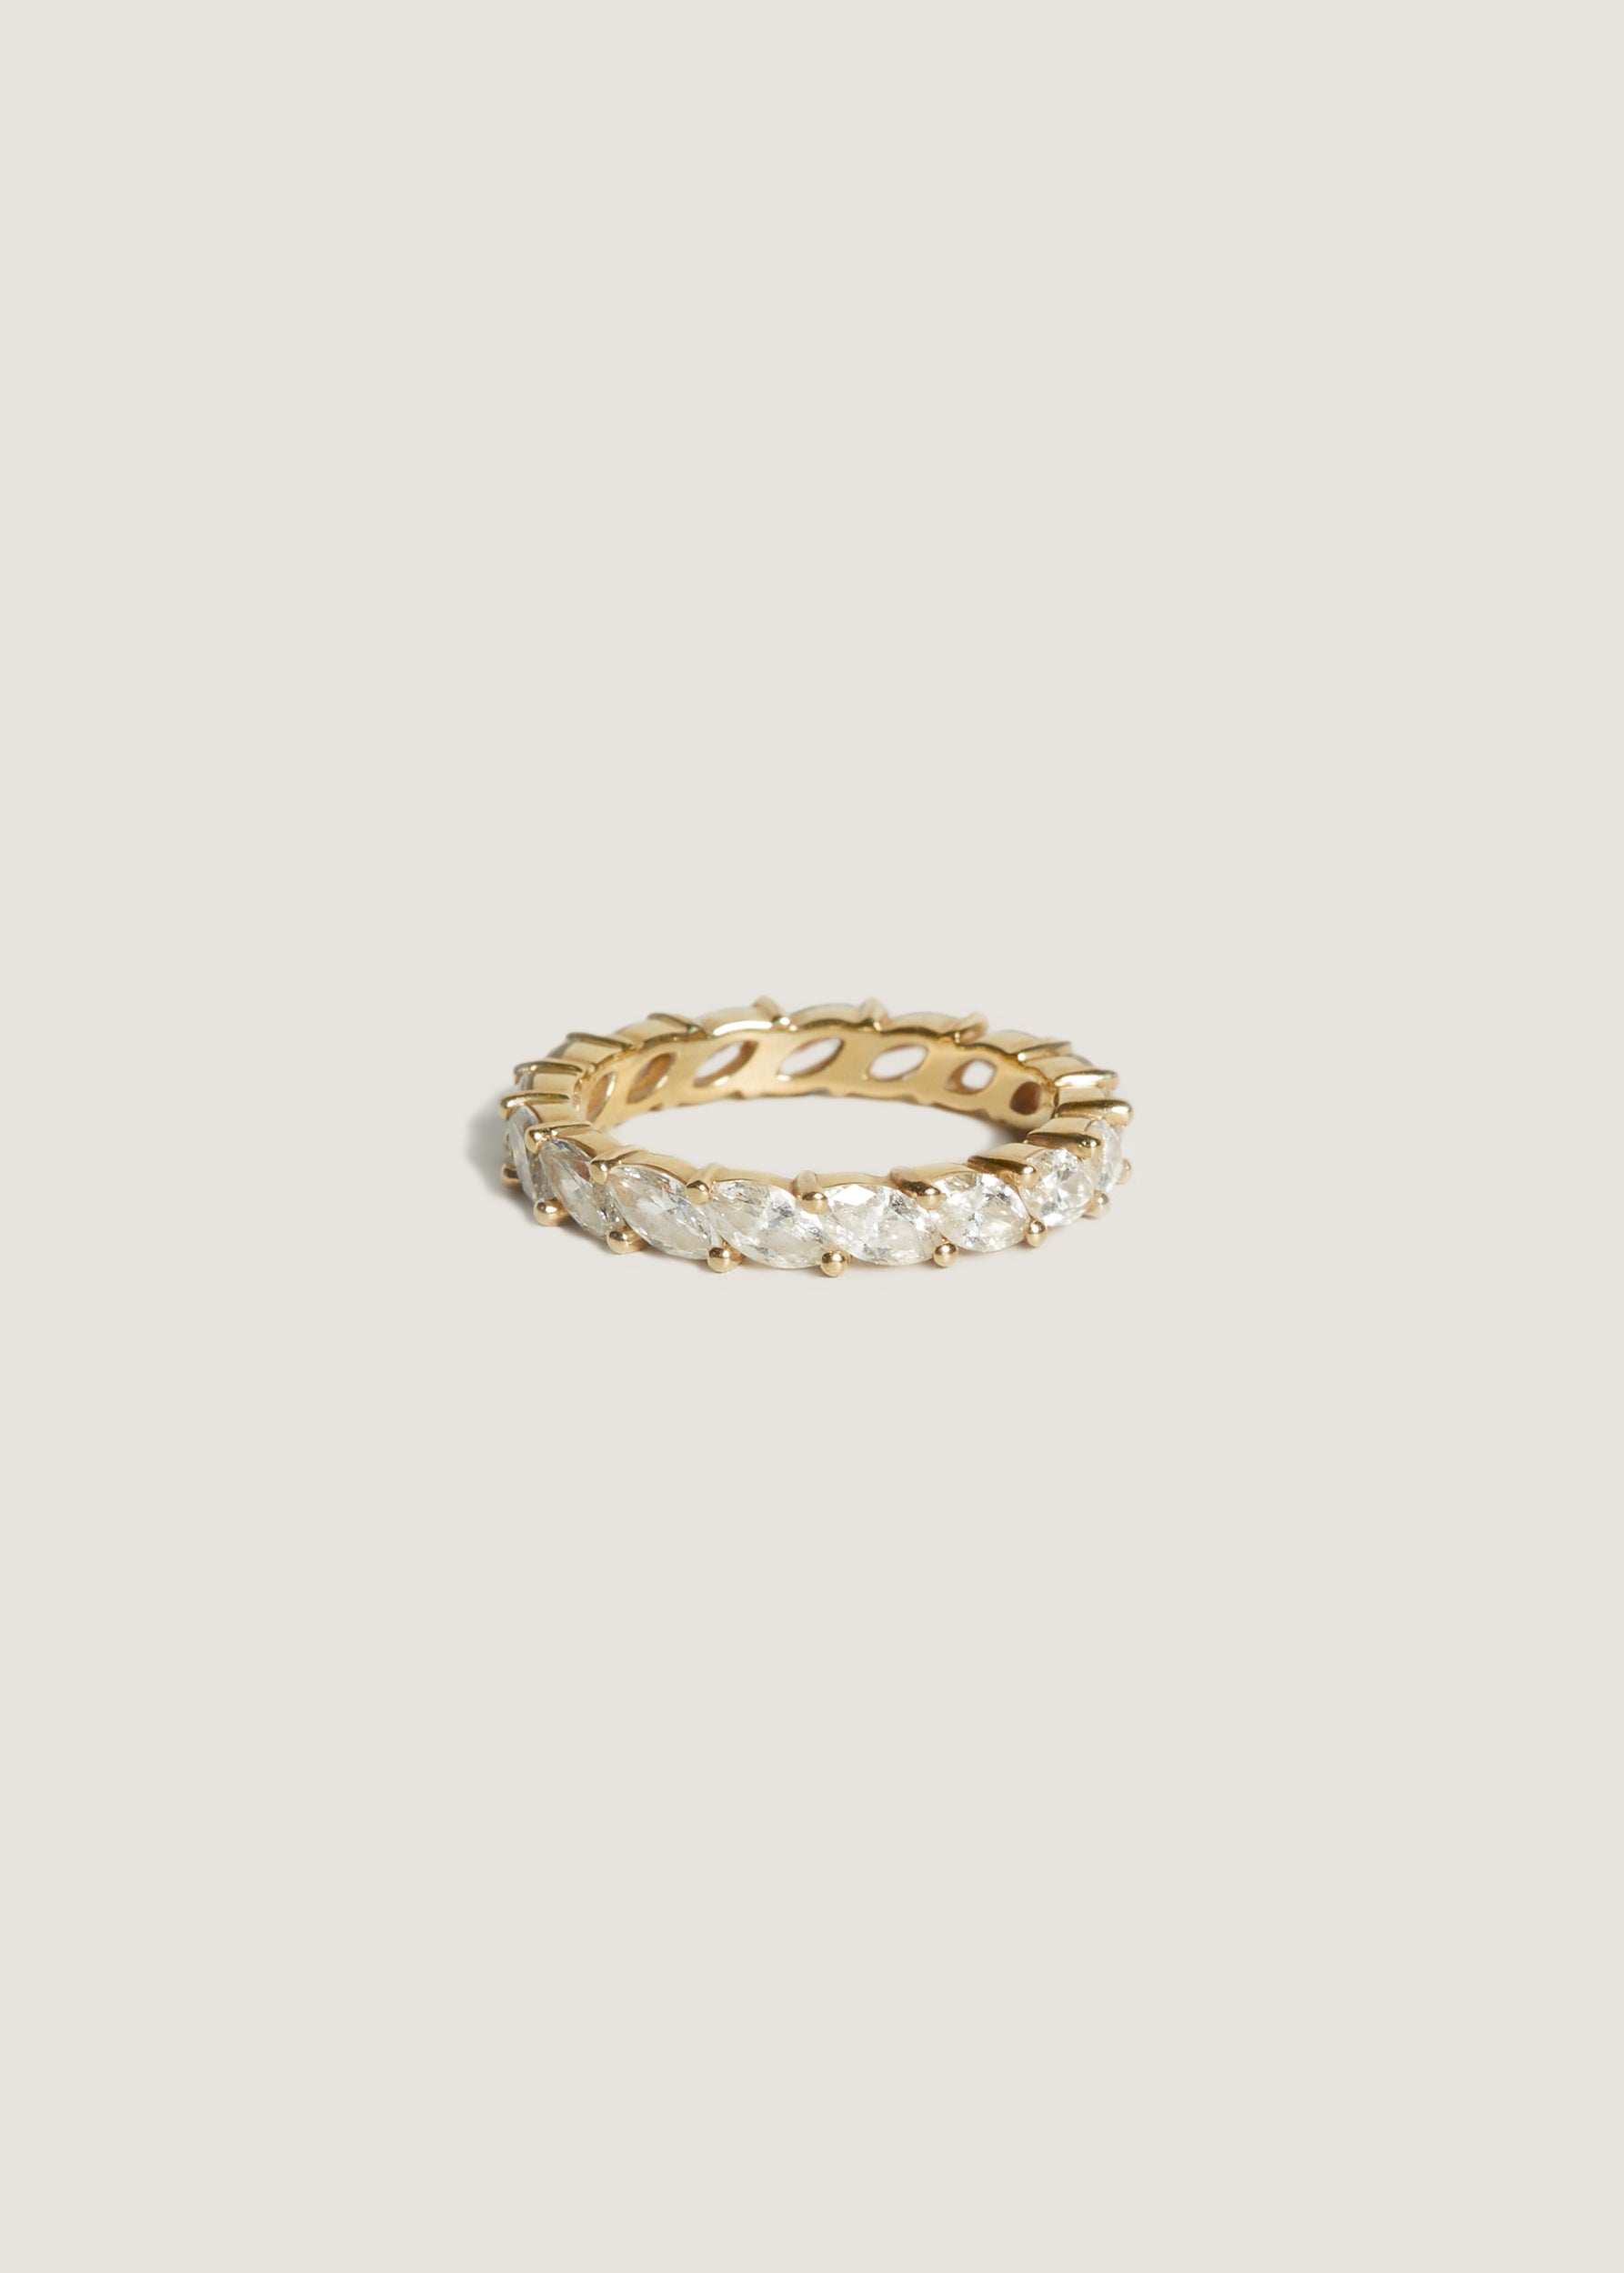 alt="Marquise Eternity Ring"